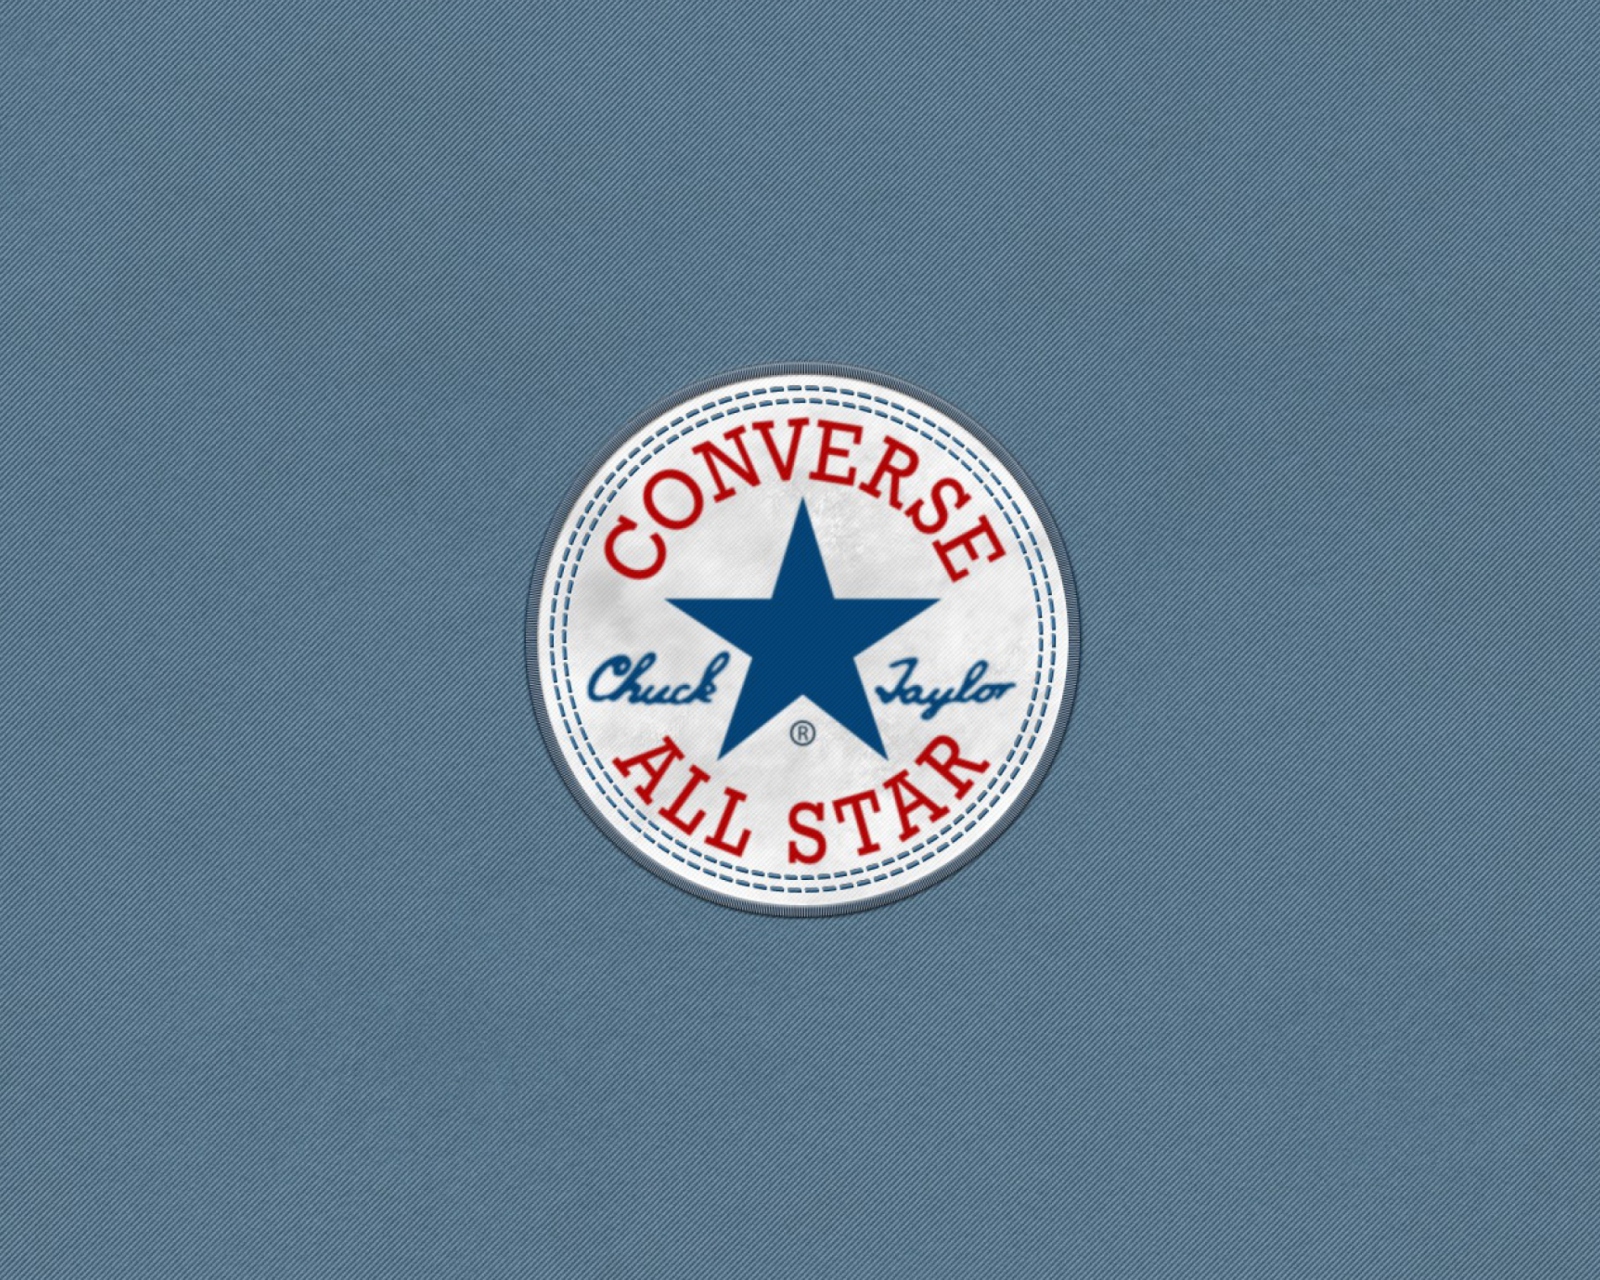 Converse All Stars wallpaper 1600x1280